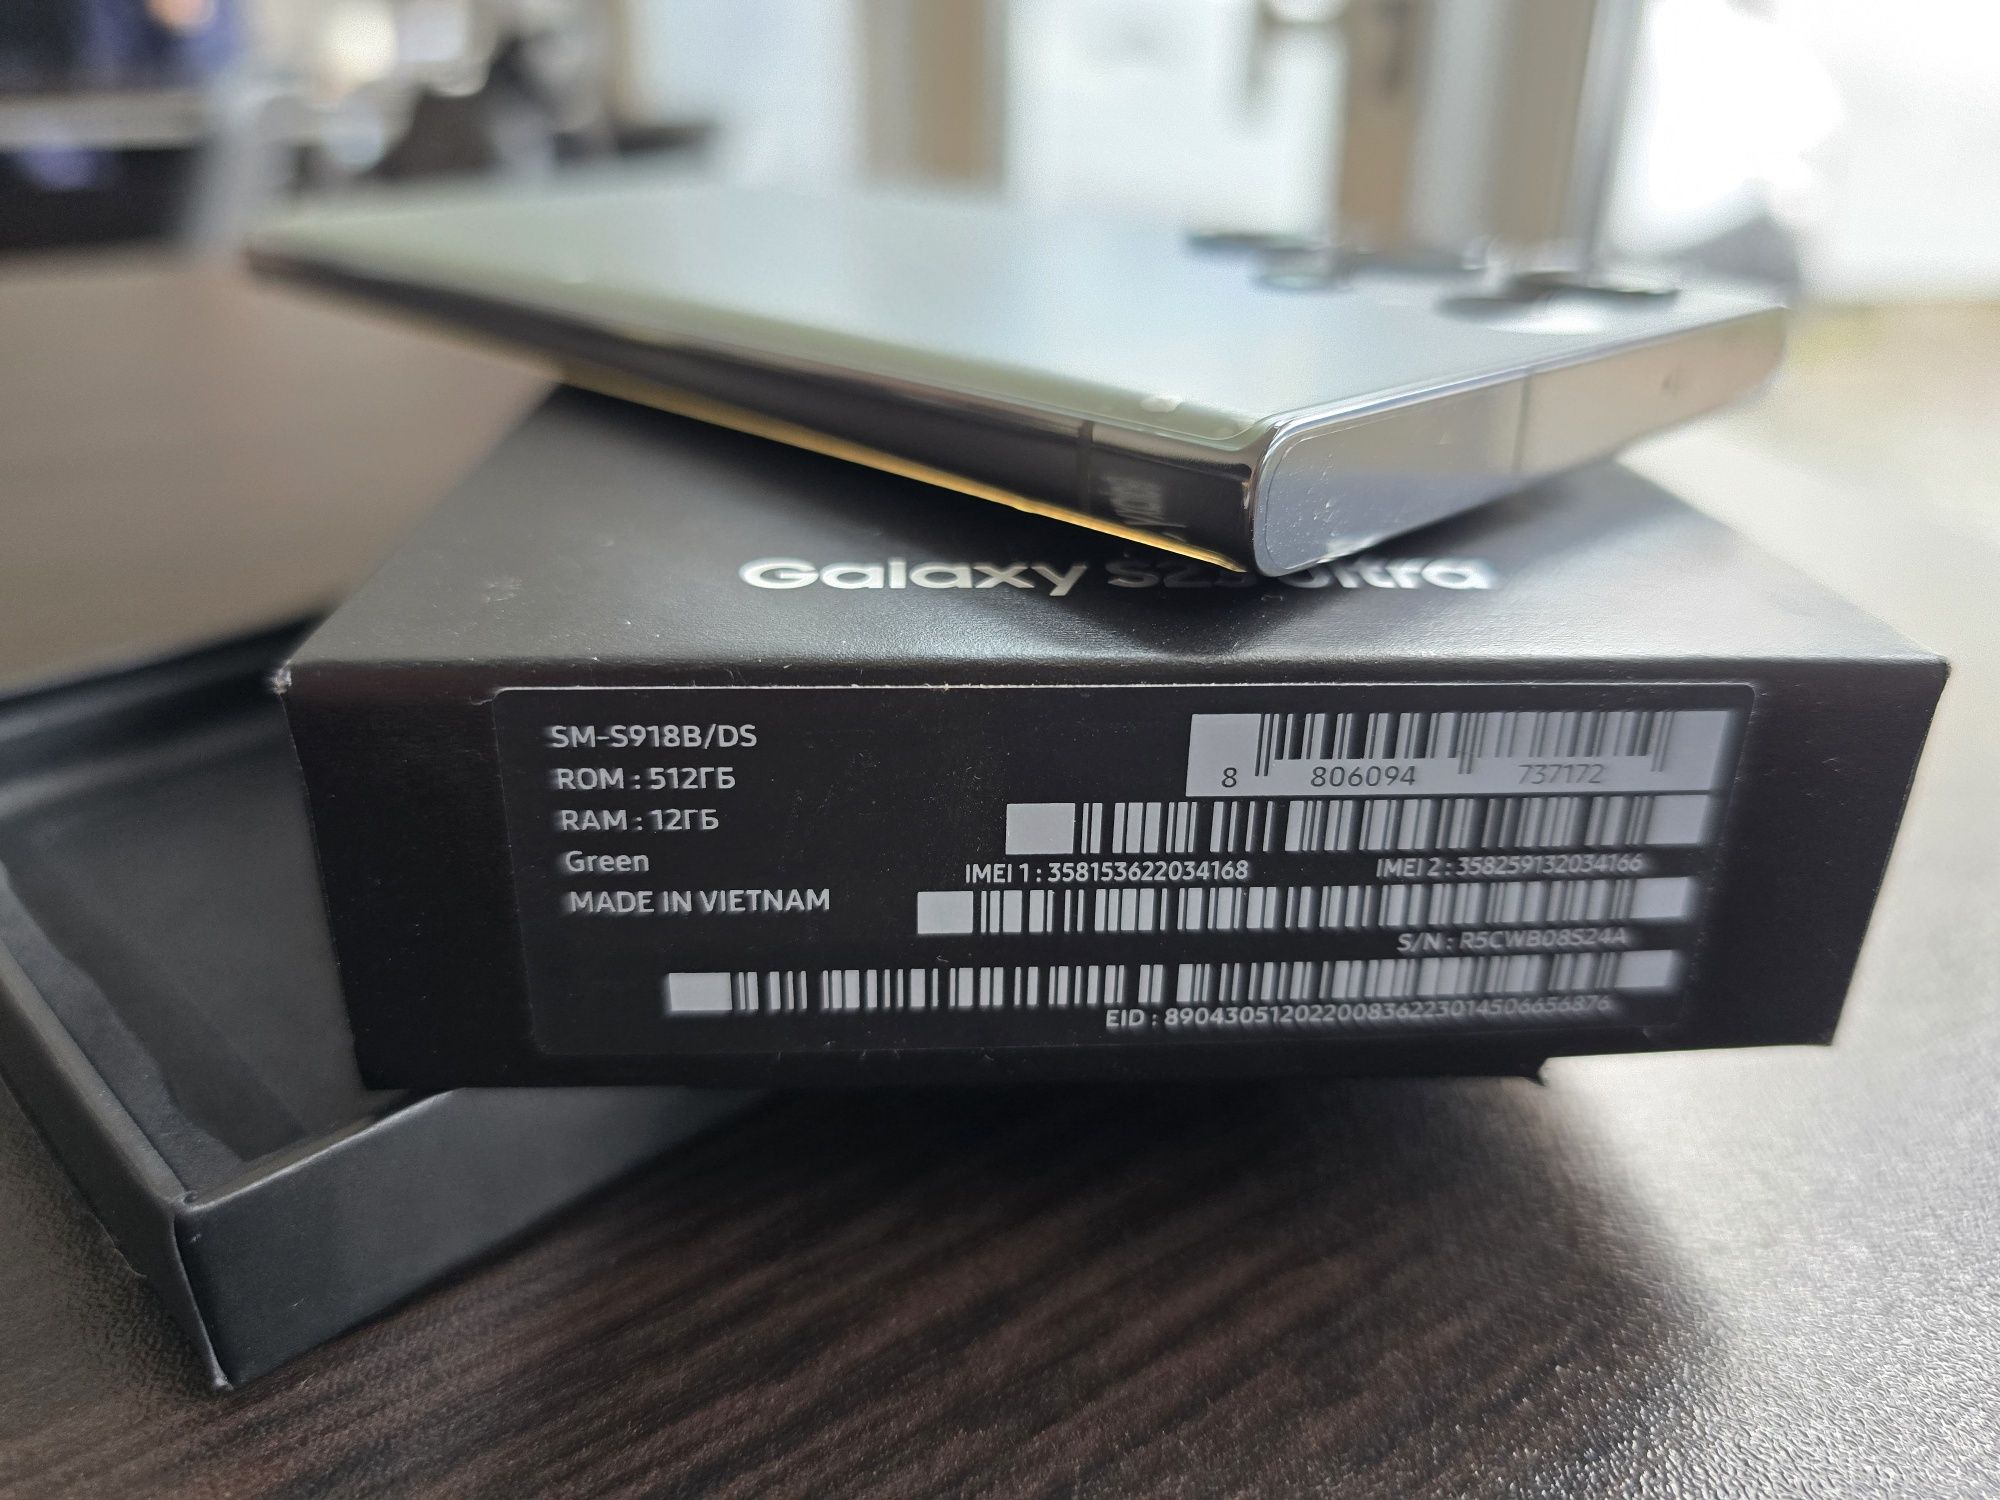 Samsung Galaxy S23 Ultra 12/512 официал, гарания, страховка